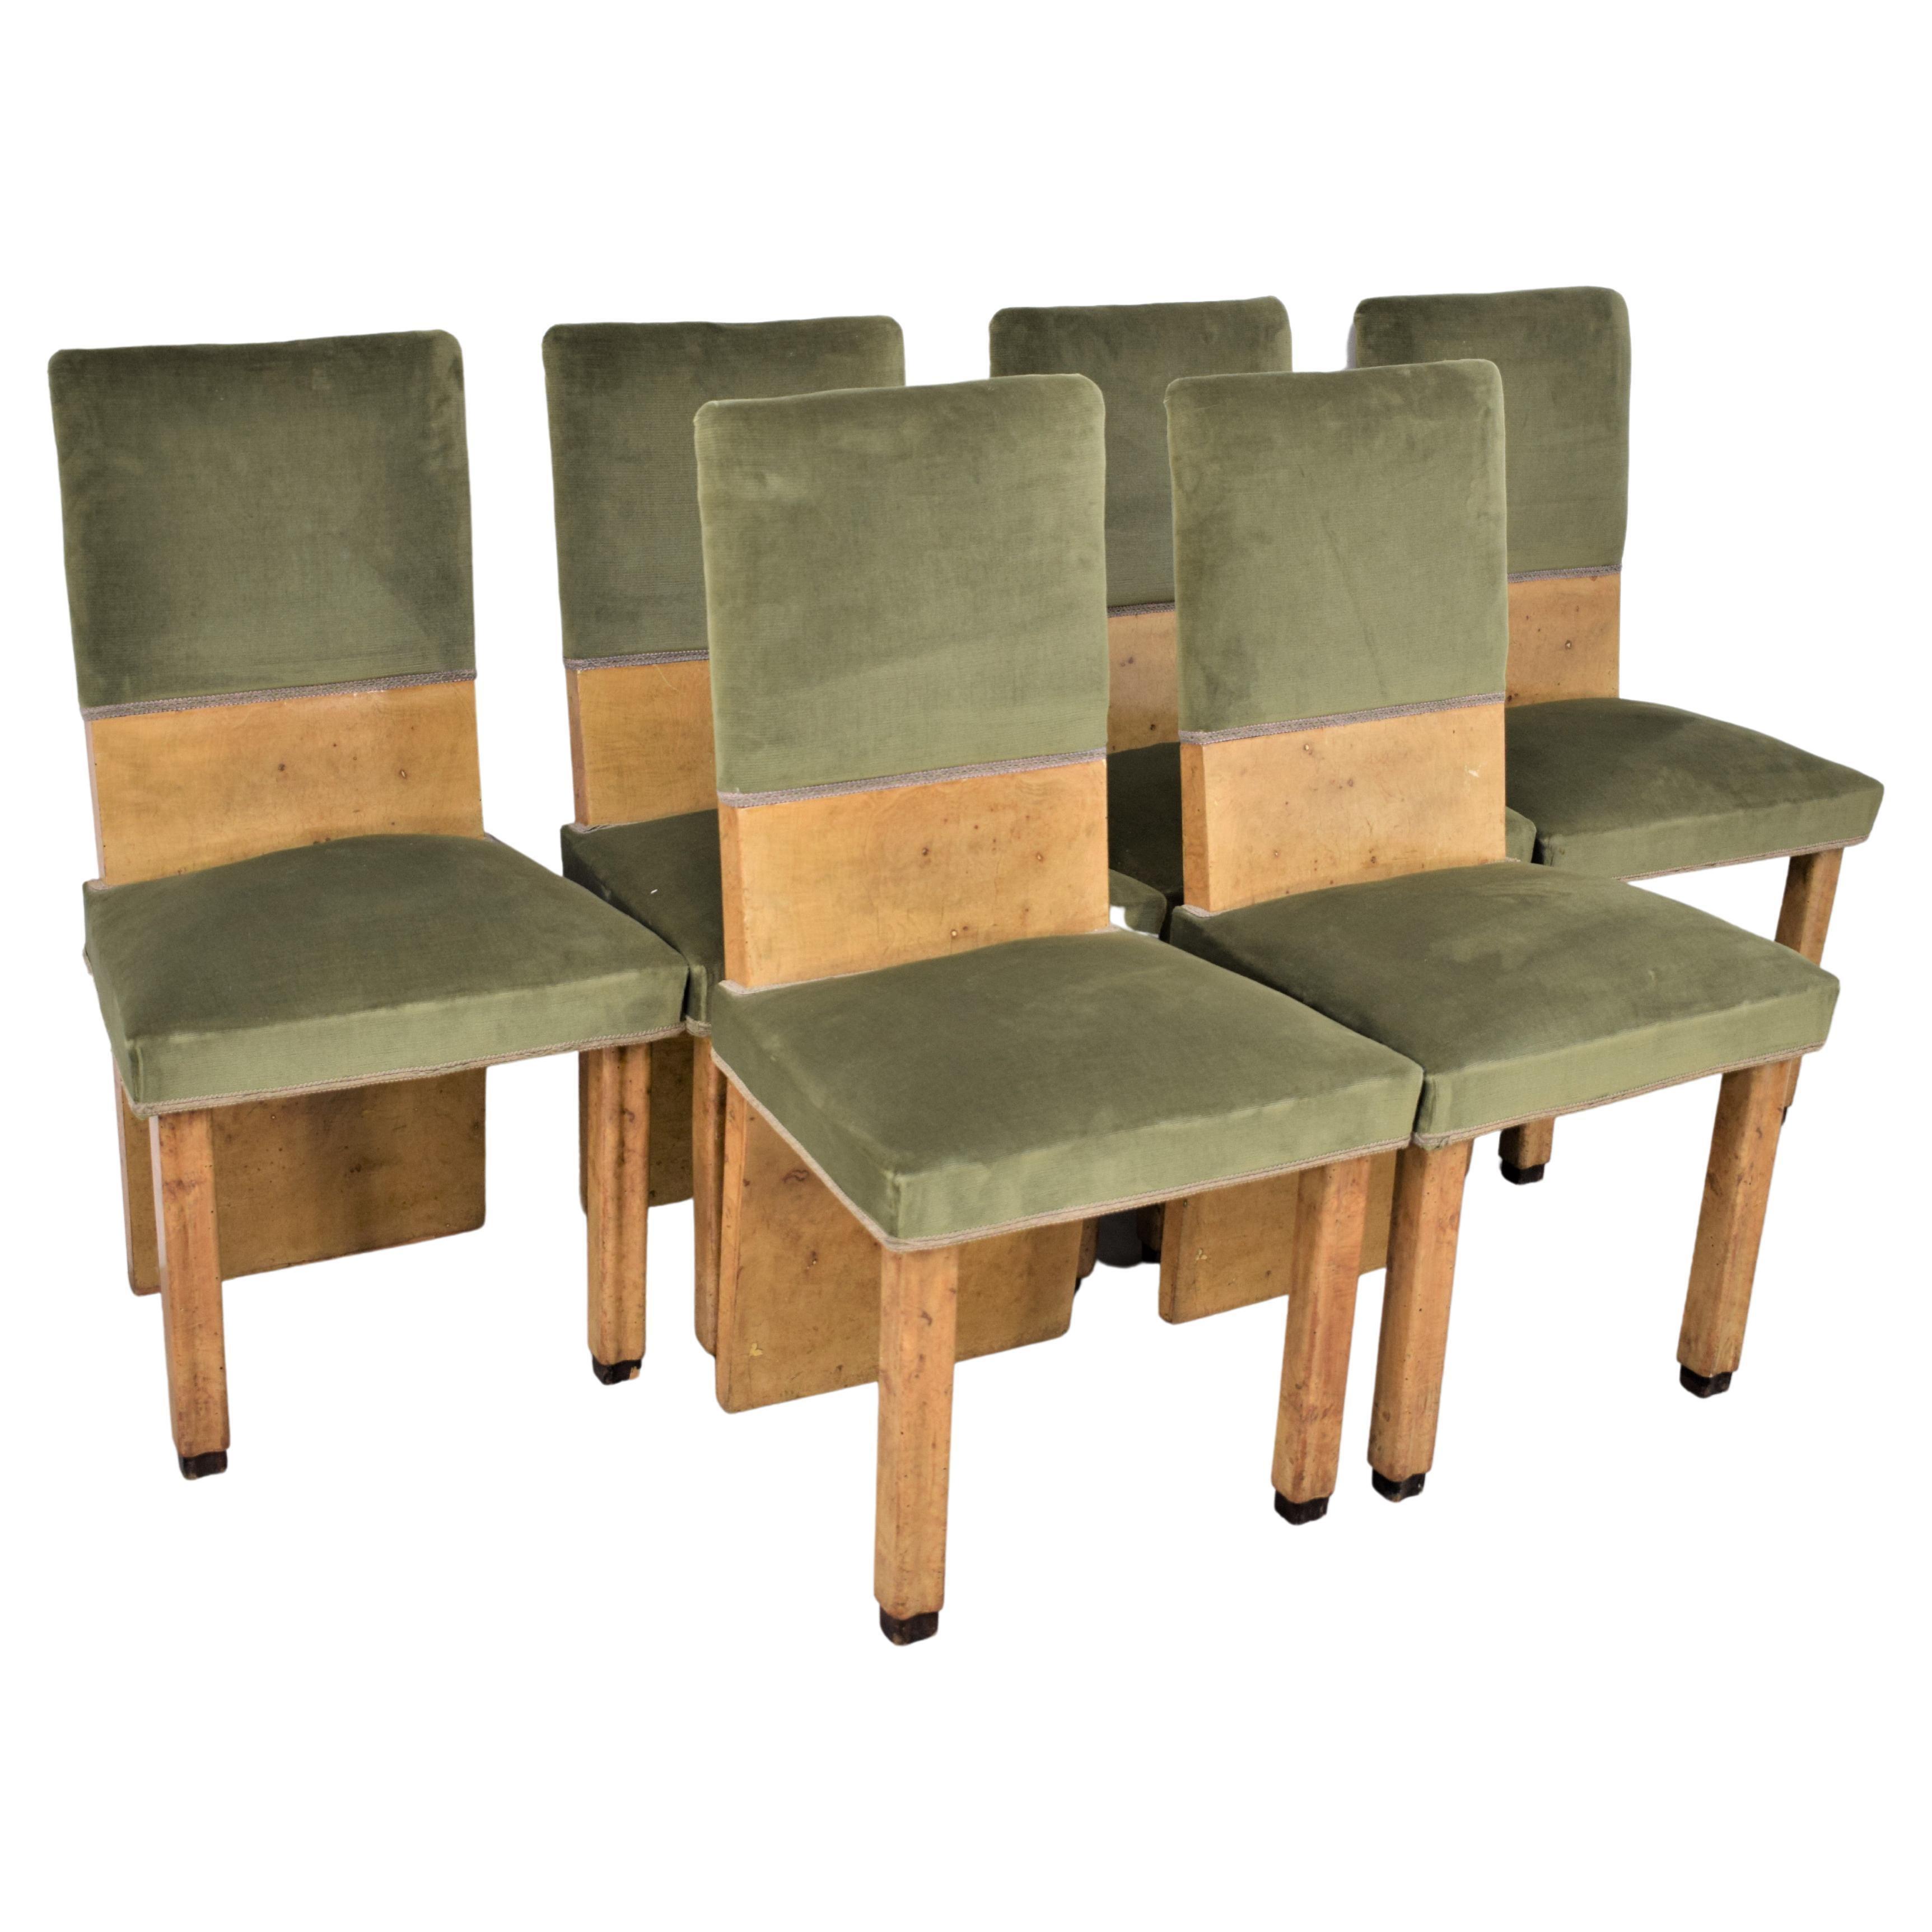 Set of Six Italian Chairs, 1930s